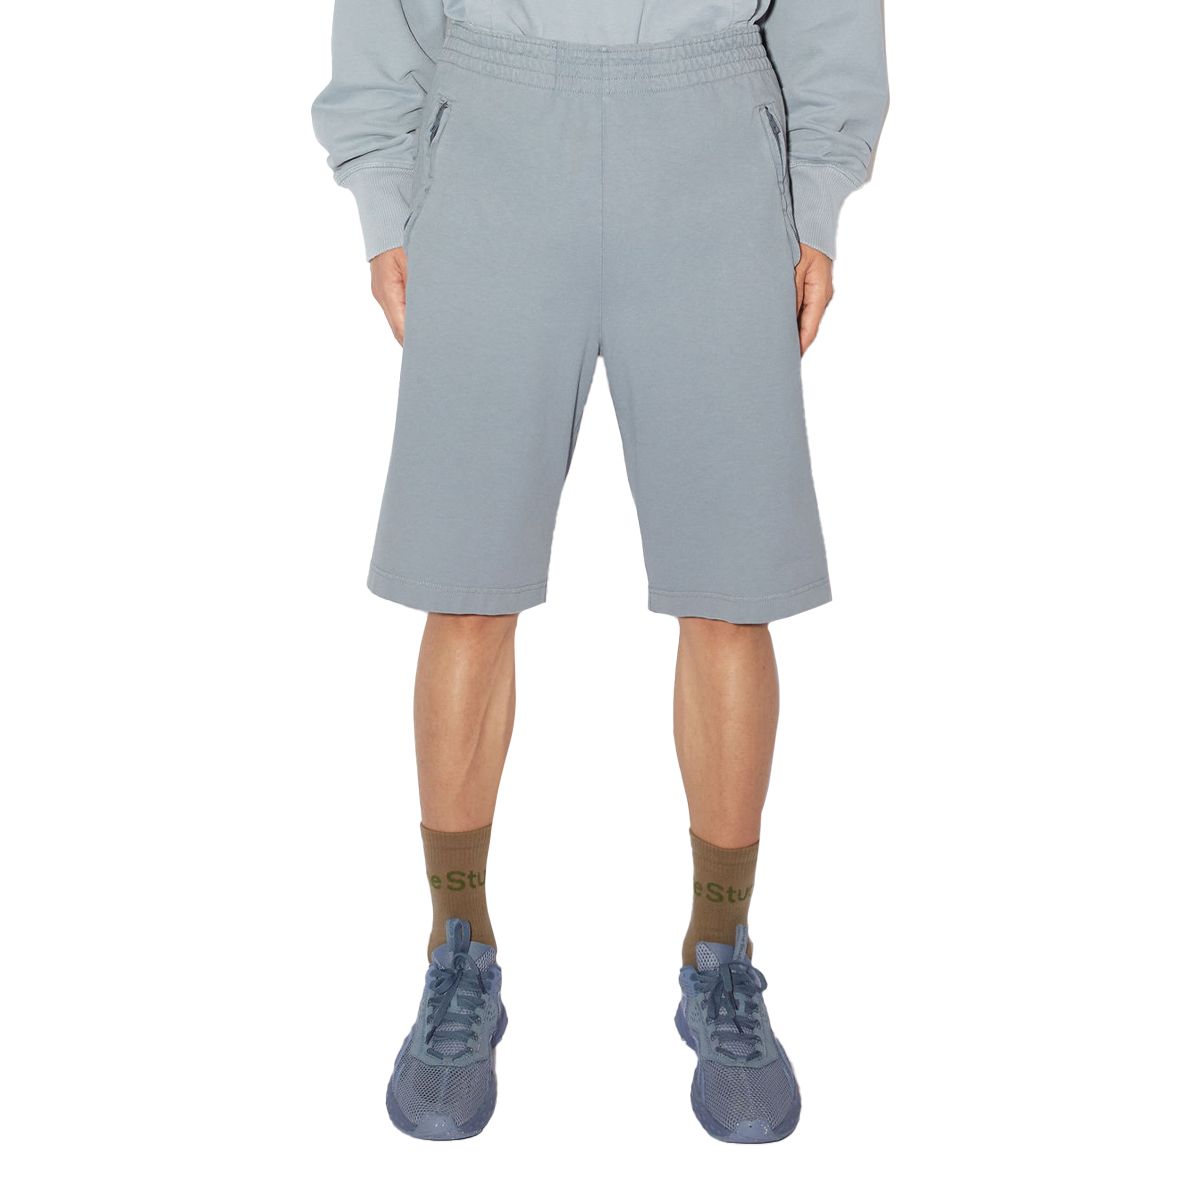 Steel Grey Sweat Shorts